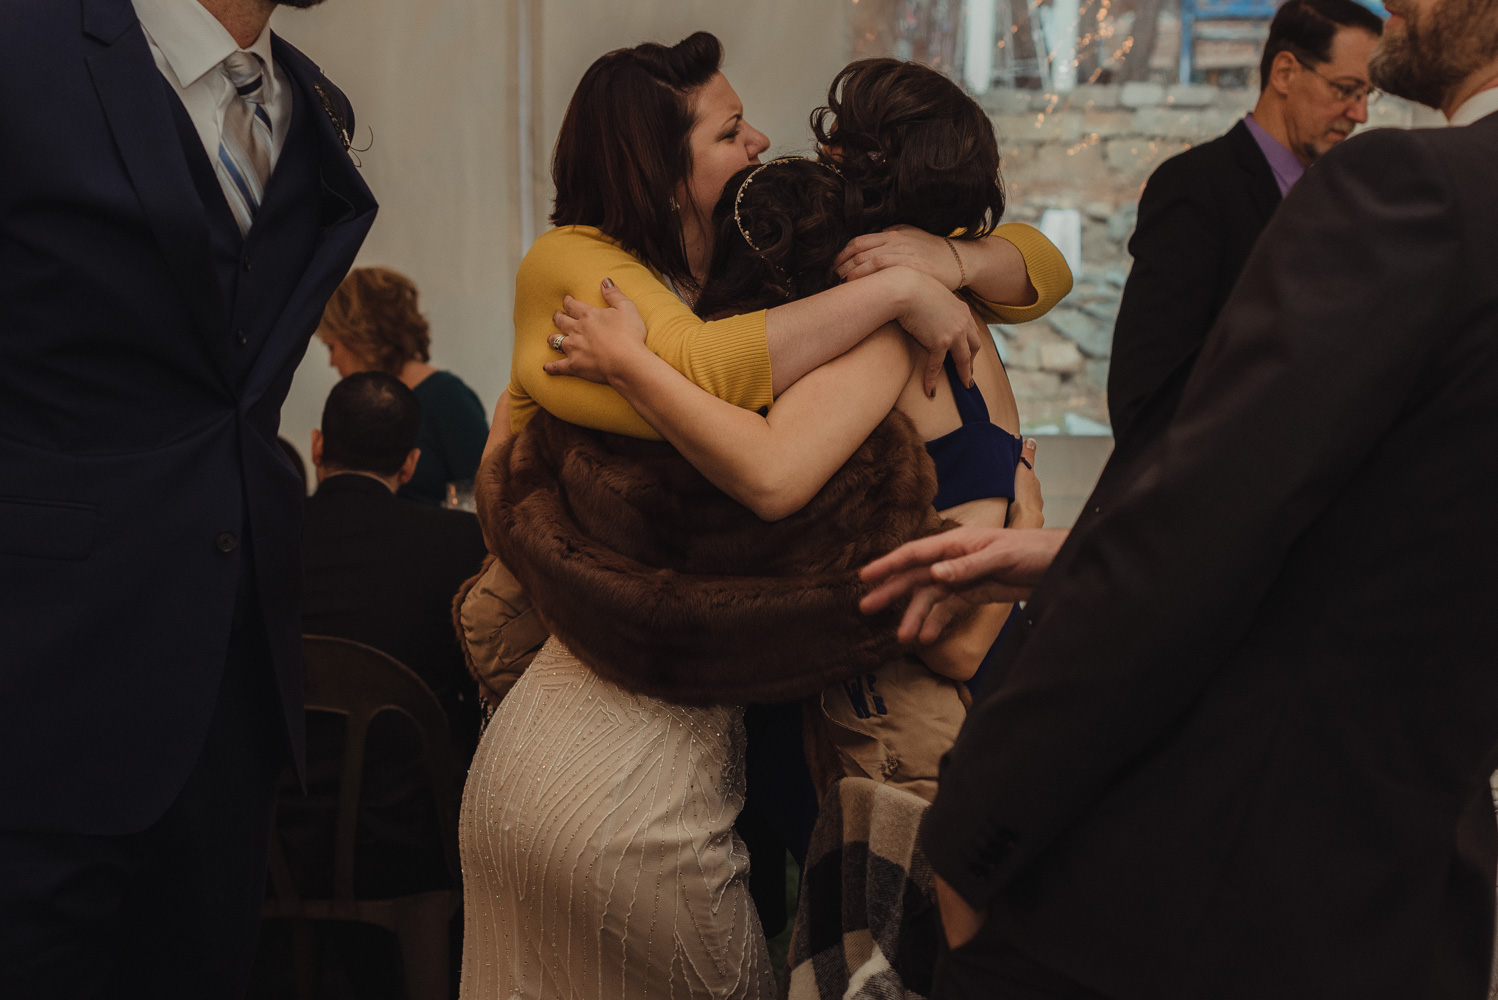 Nevada City wedding reception guests hugging photo